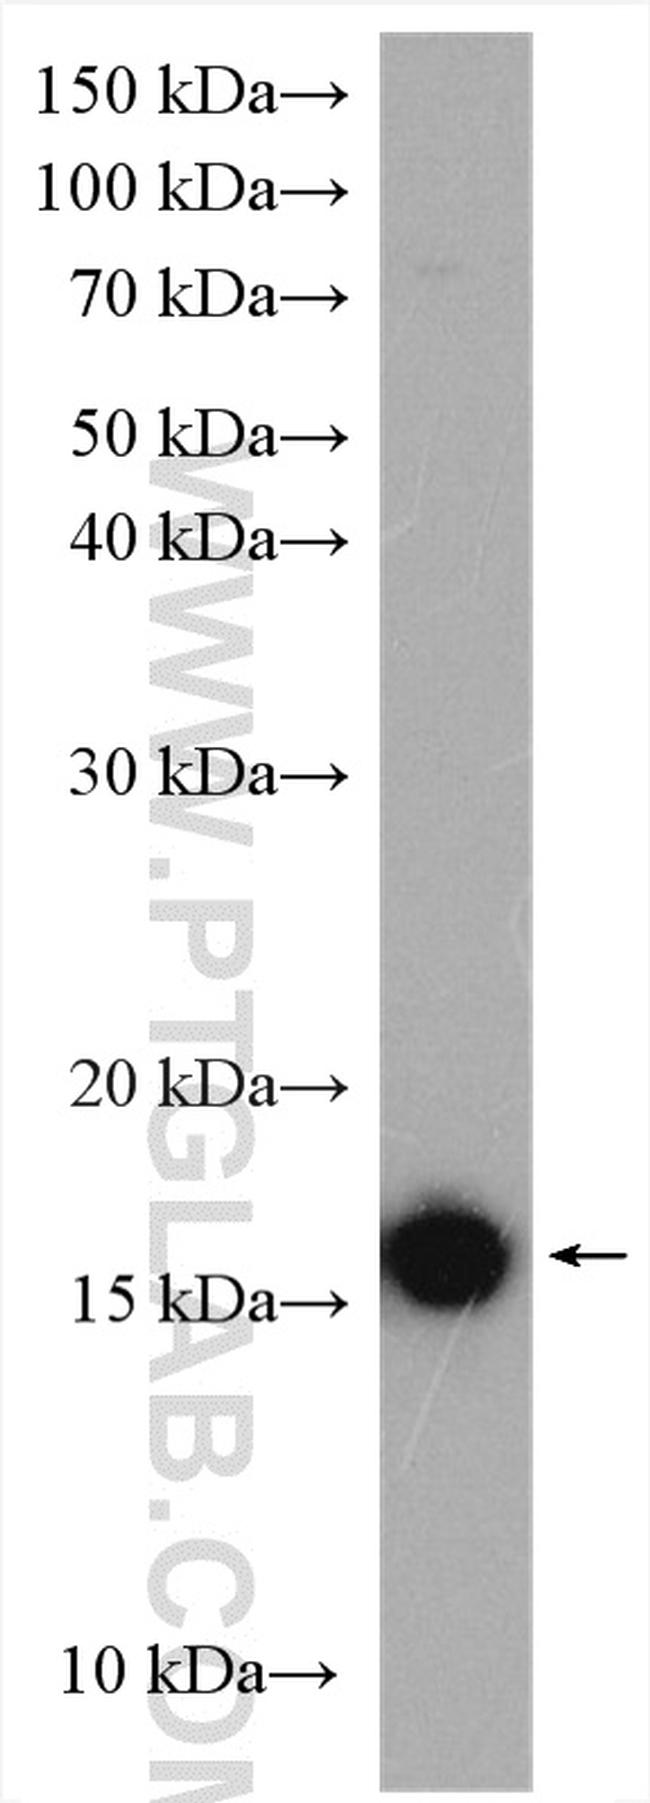 P16-INK4A Antibody in Western Blot (WB)